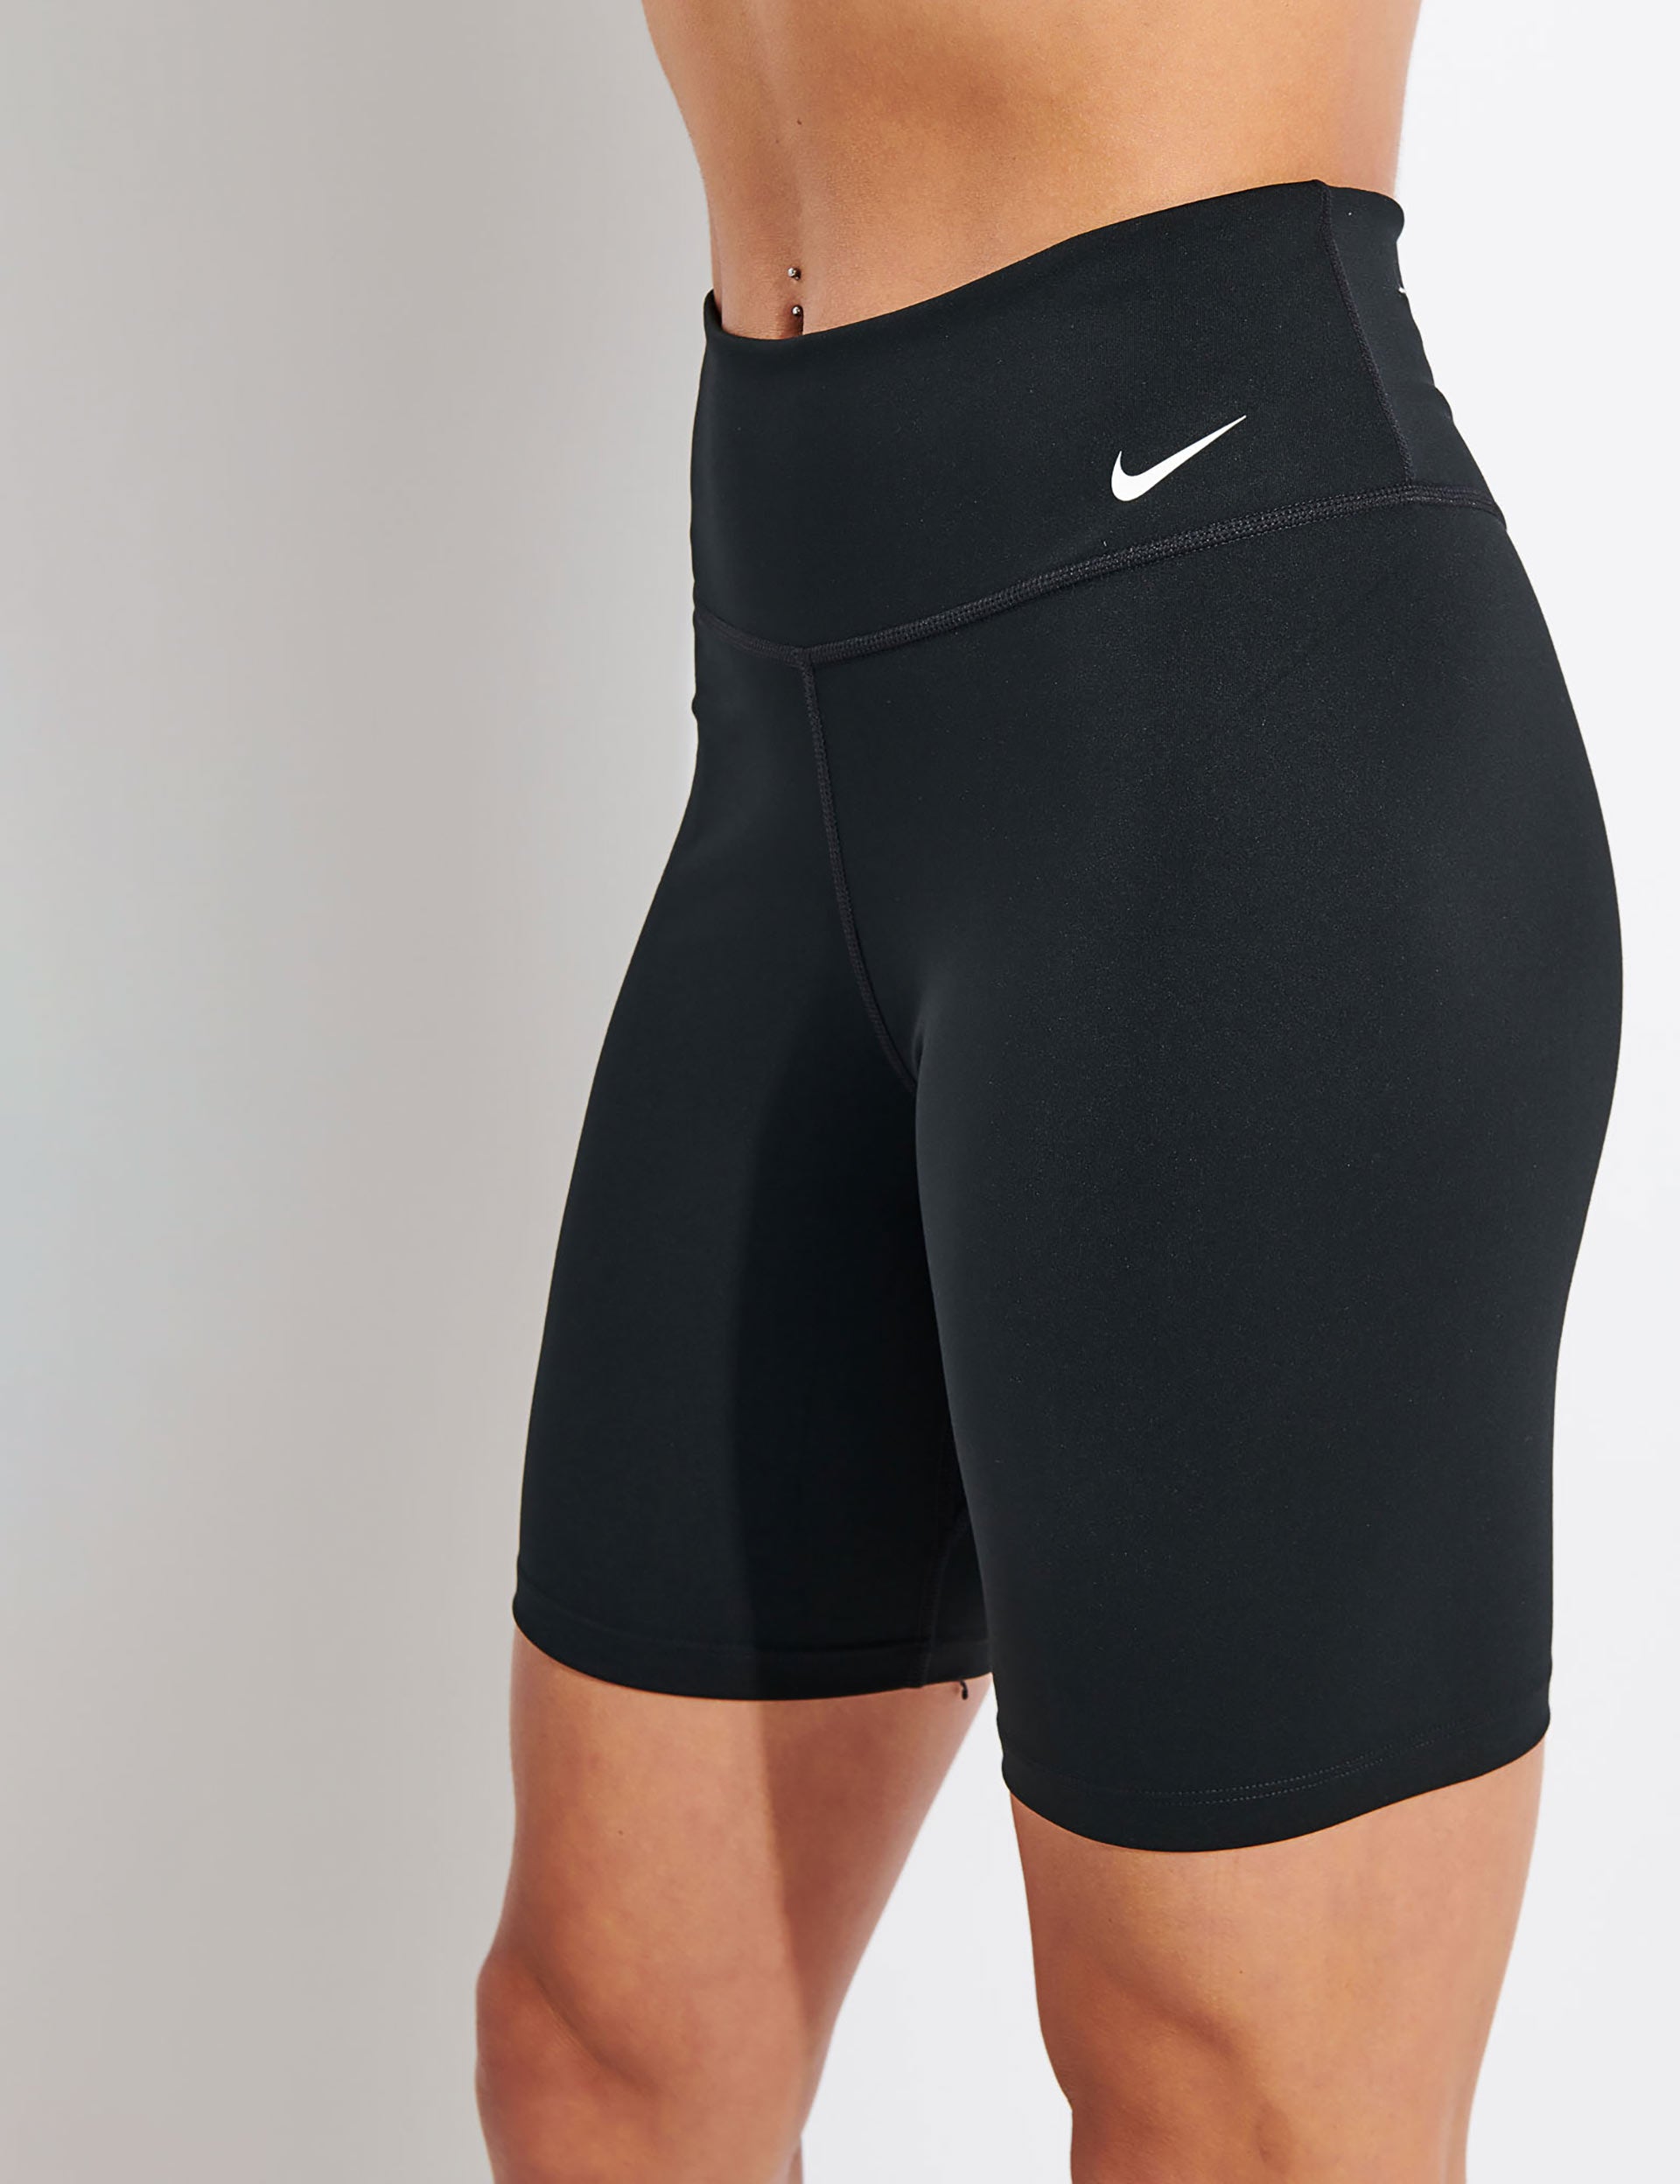 Nike One Bike Shorts 7" - Black/Whiteimage1- The Sports Edit